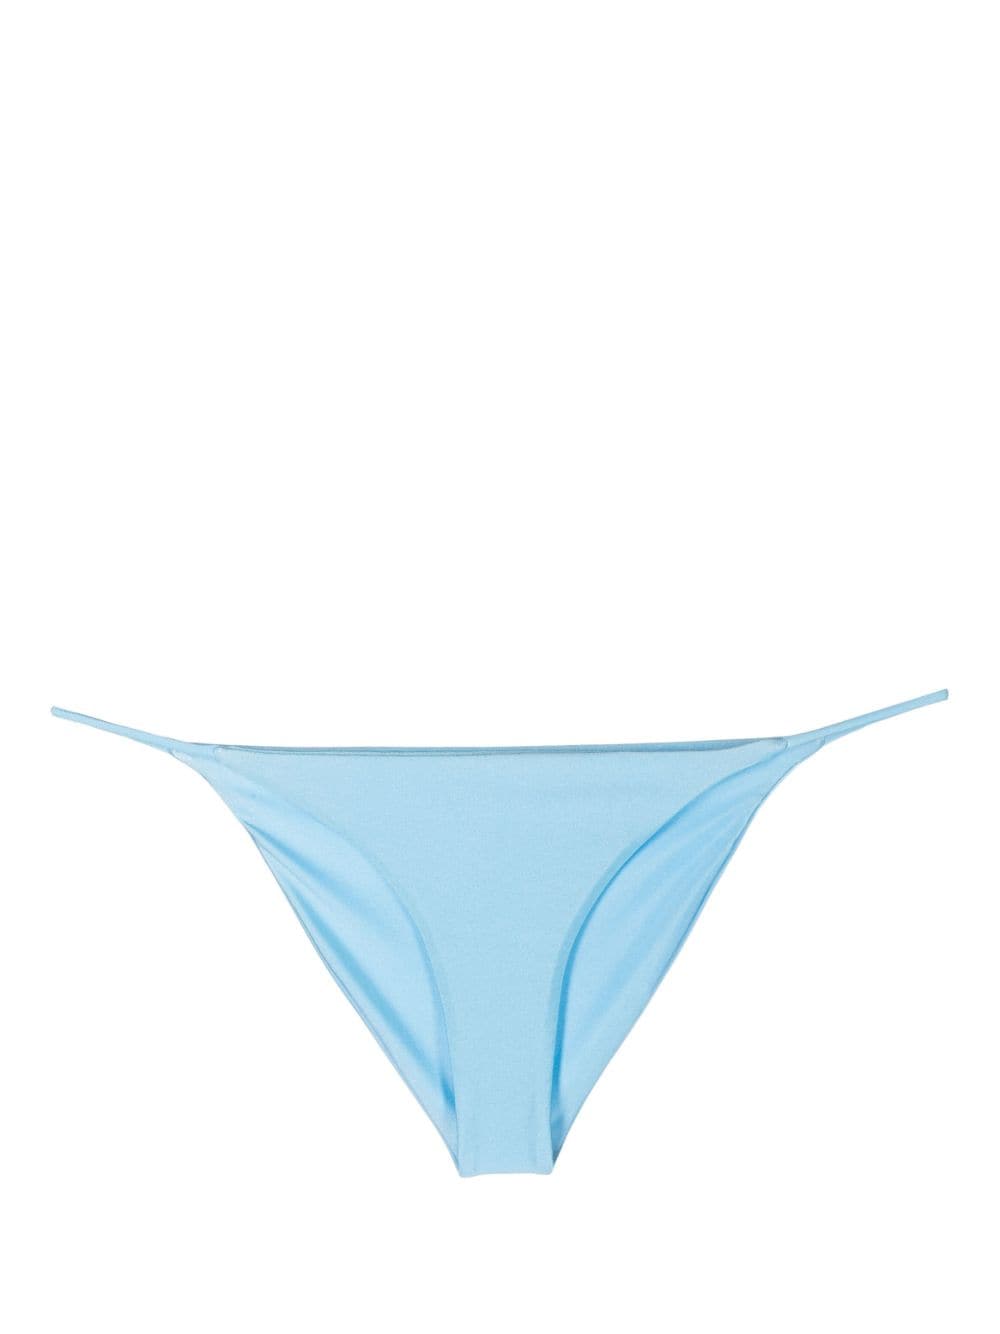 JADE Swim Bare Minimum Bikini Bottoms - Farfetch